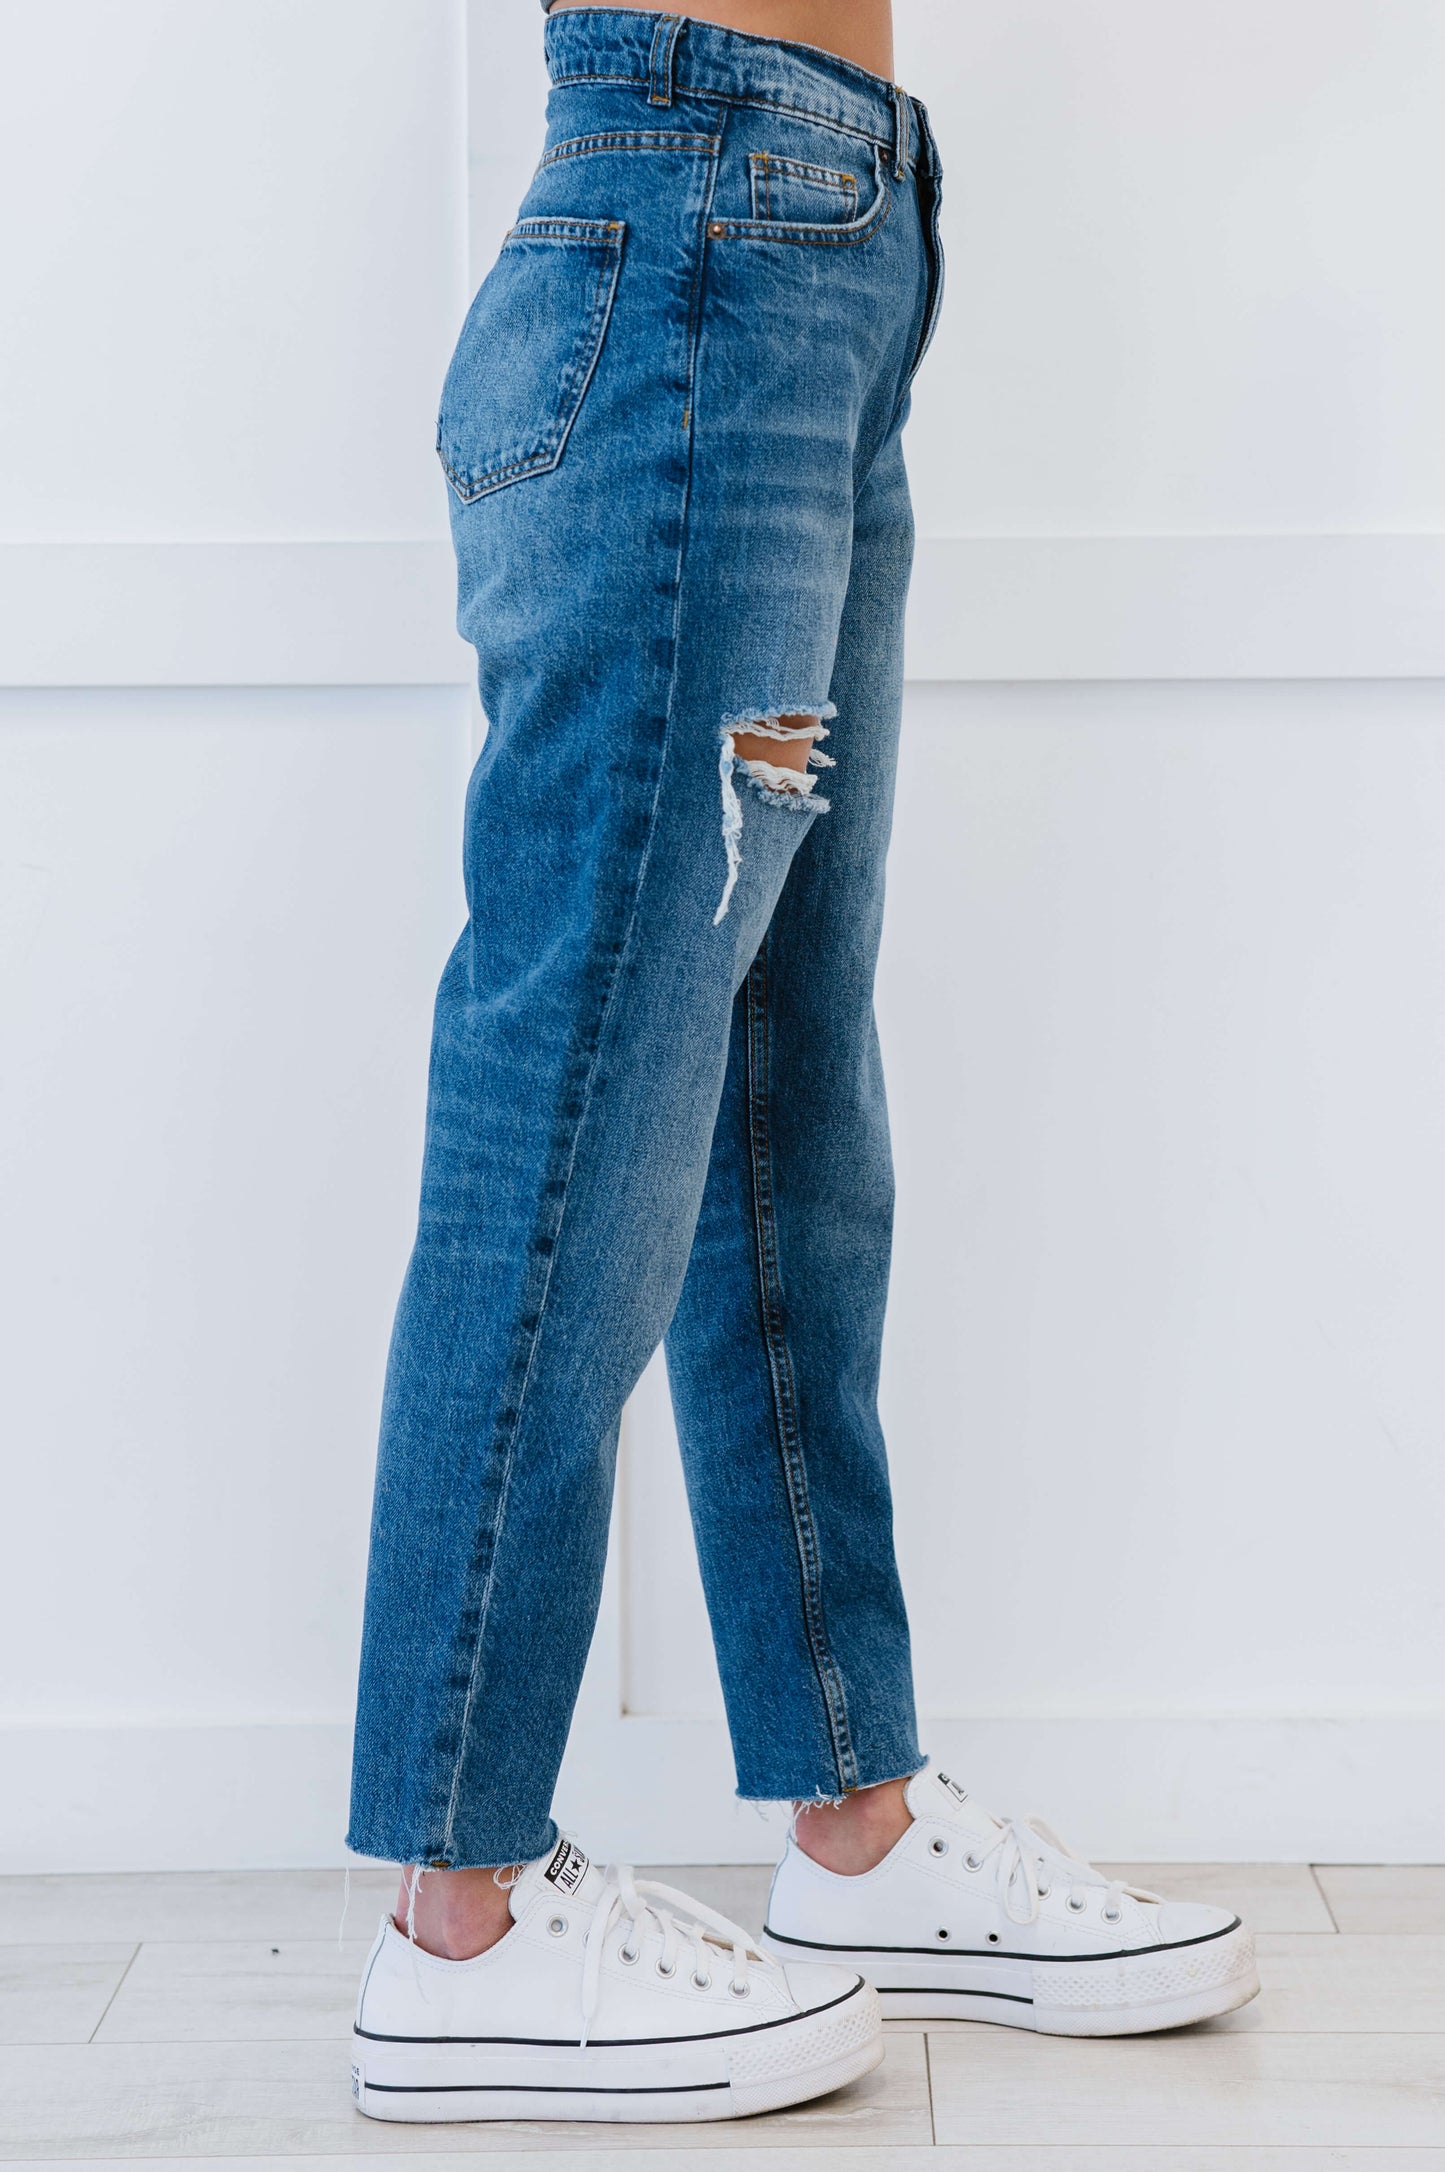 Muselooks Distressed High Waist Boyfriend Jeans